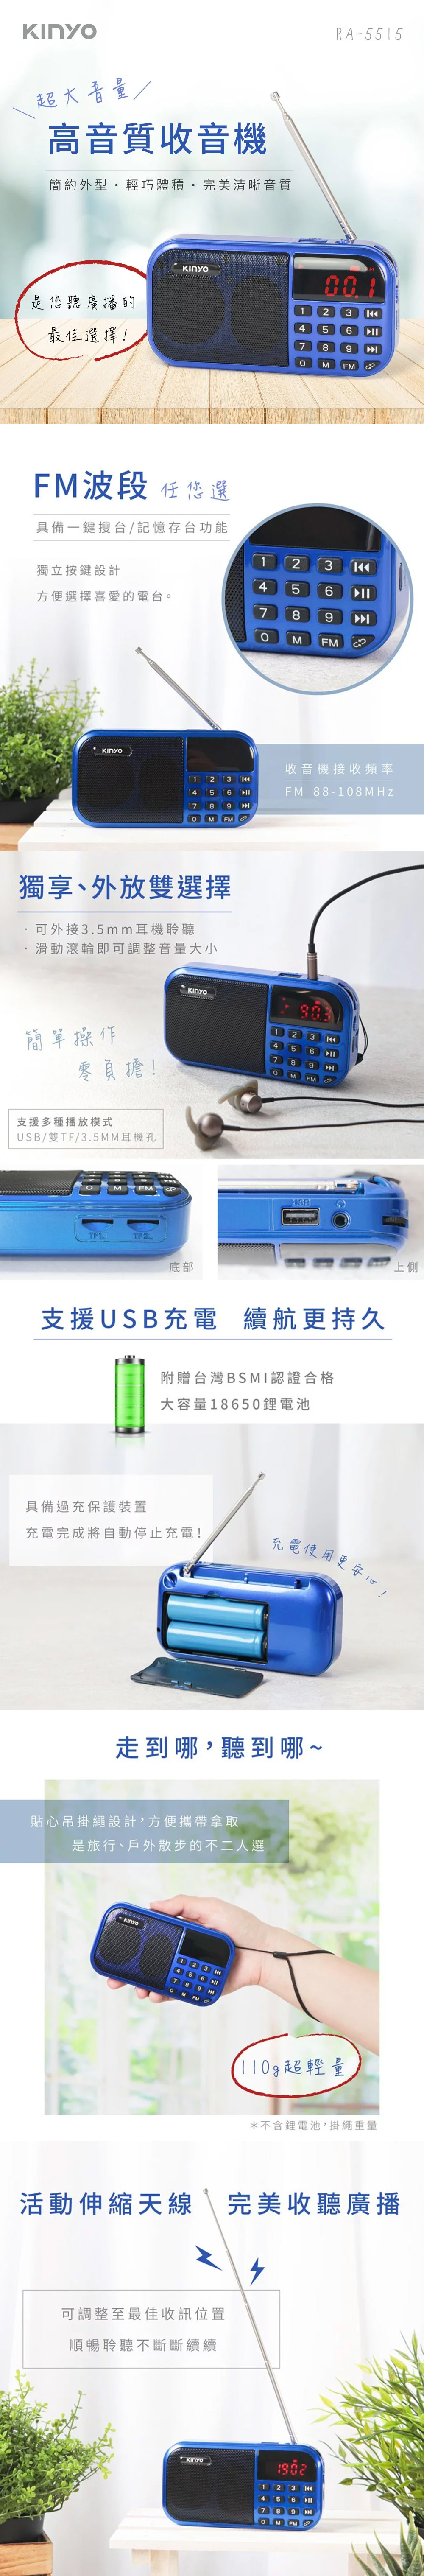 USB kinyo 自動 kinyo 自動 USB